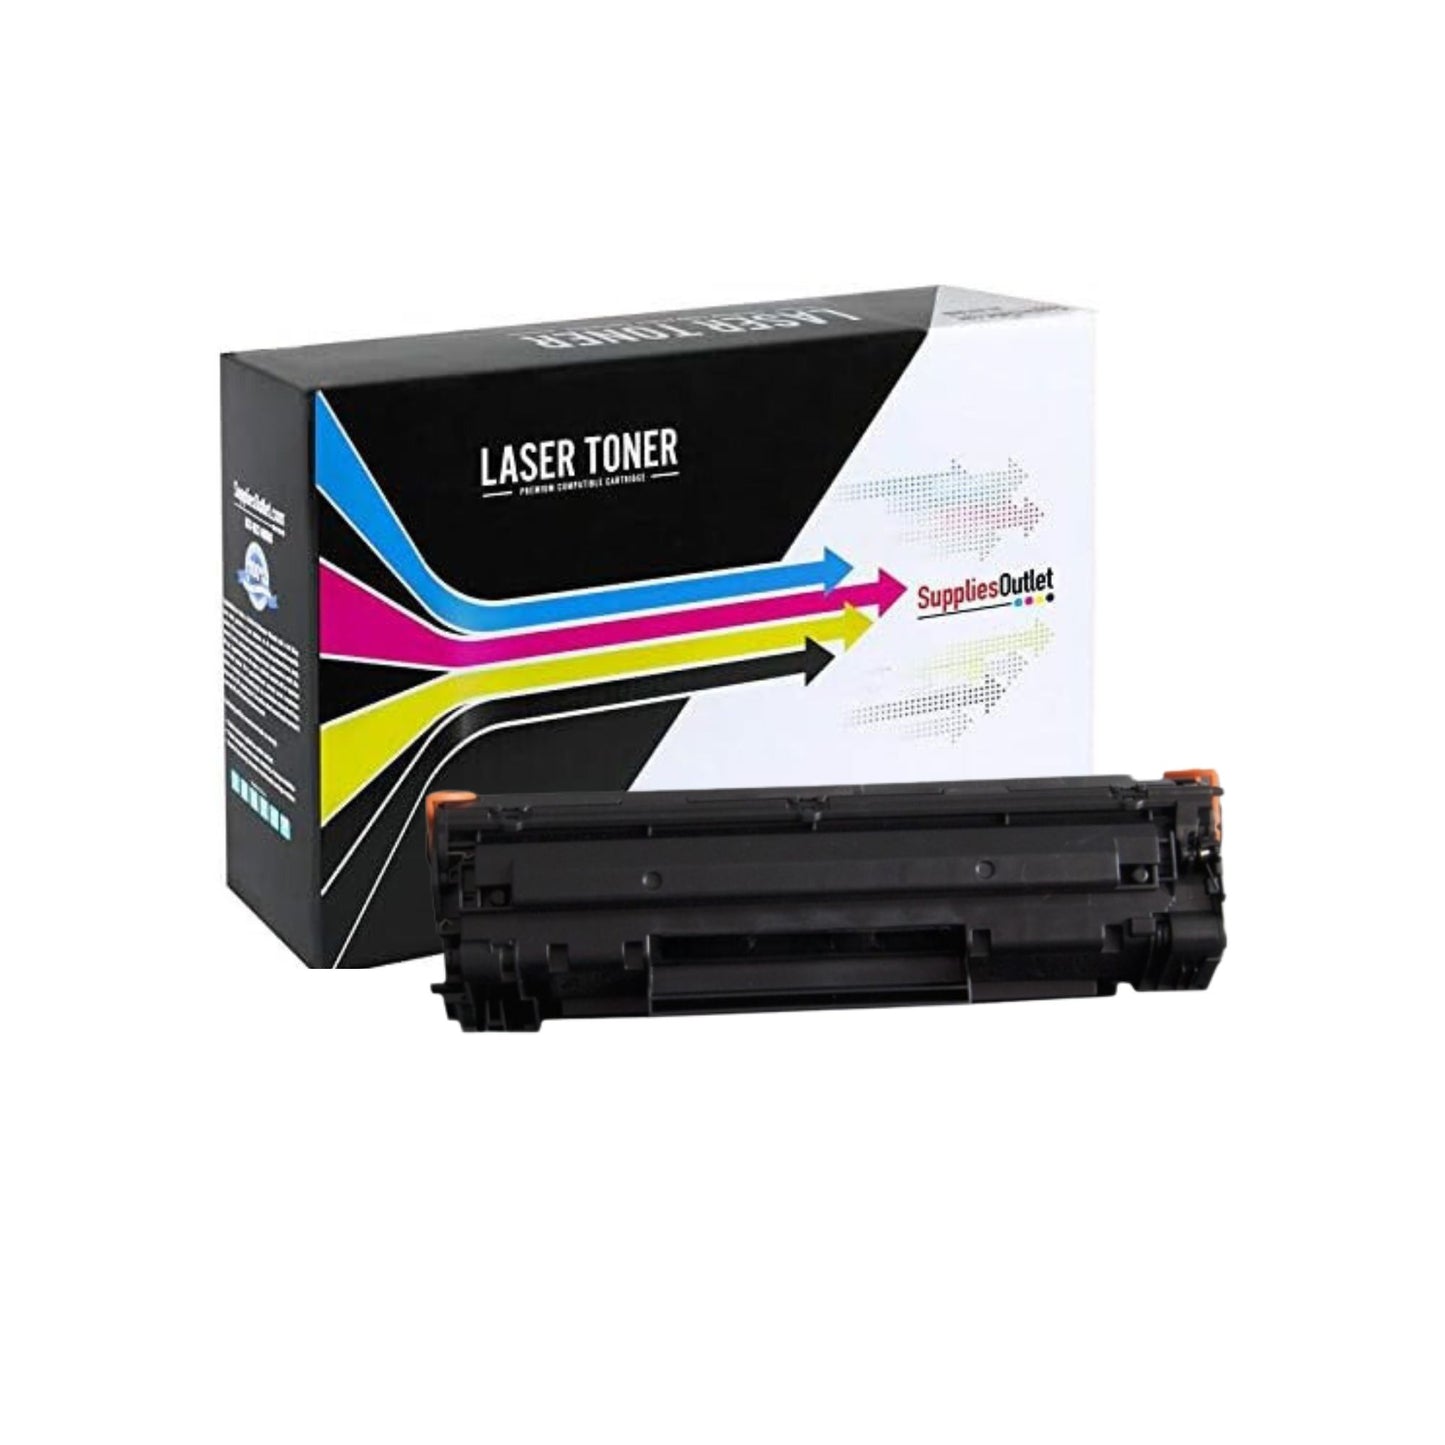 Compatible HP CF283X Black Toner Cartridge High Yield - 2,200 Page Yield